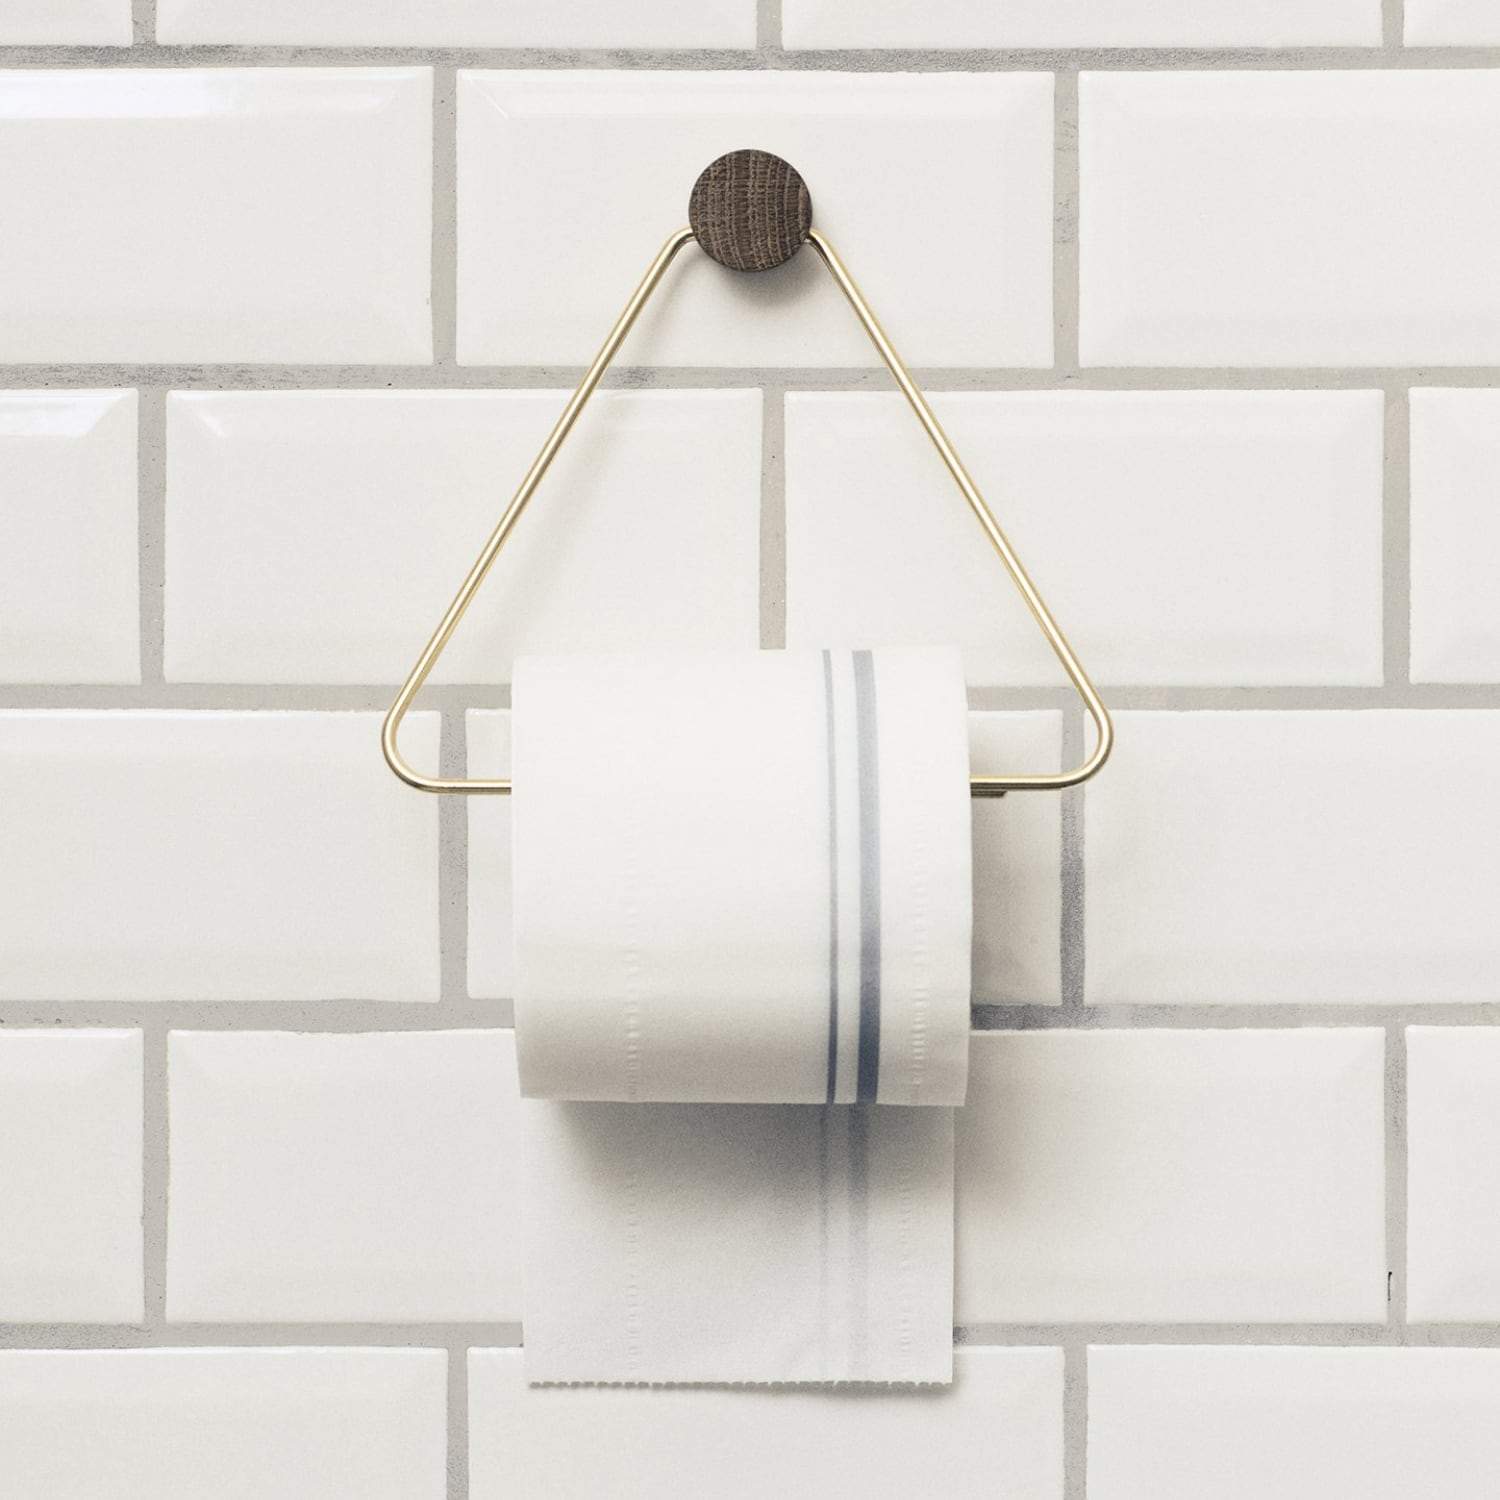 Ferm Living - Curvature Toilet Paper Holder - Black Brass